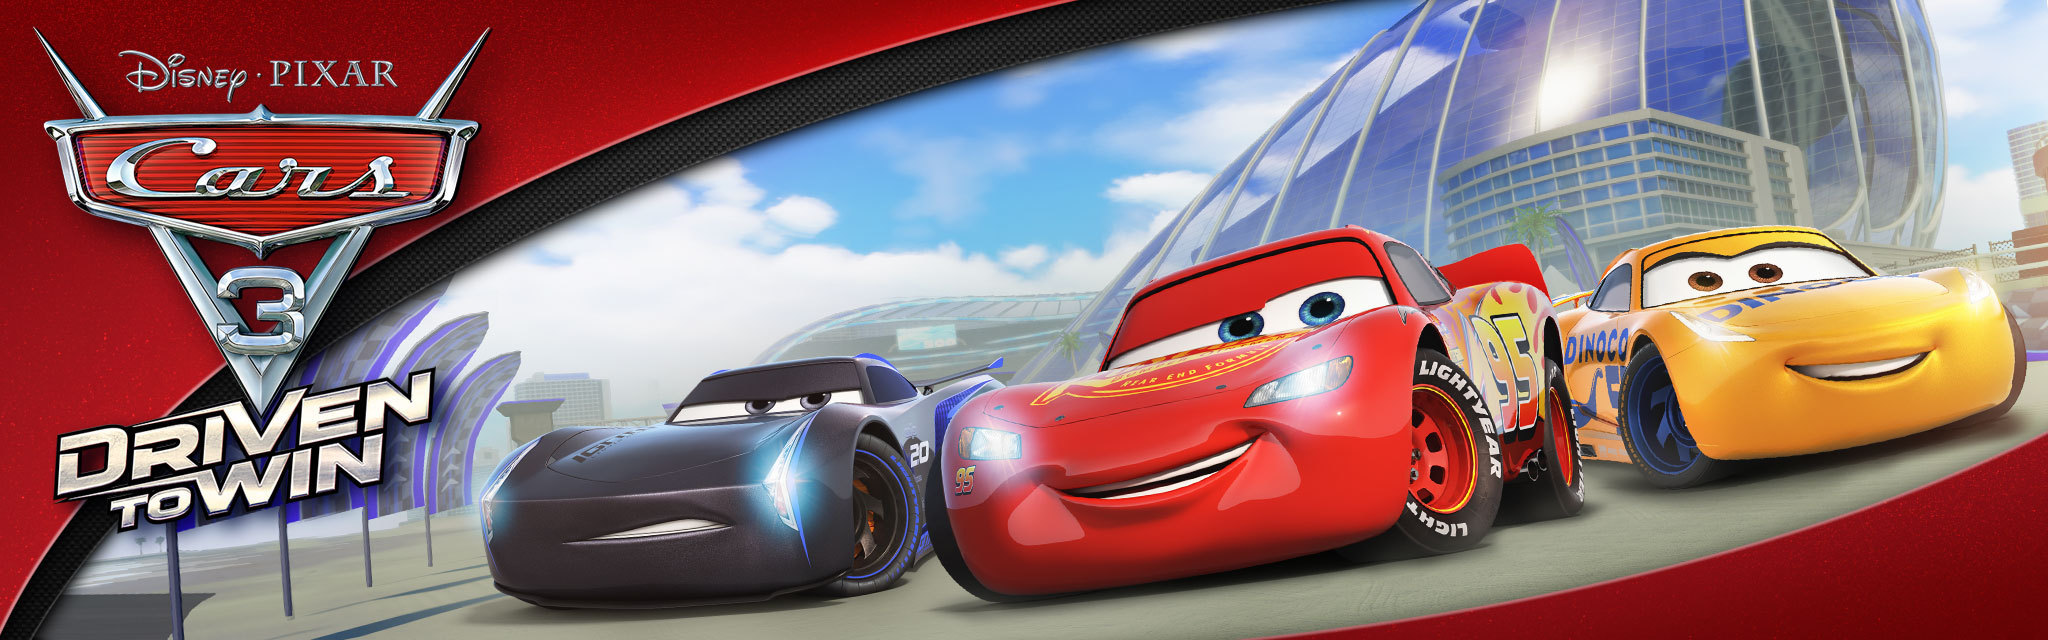 Lightning McQueen Semakin Minder Di Trailer Terbaru Cars 3 Layarid